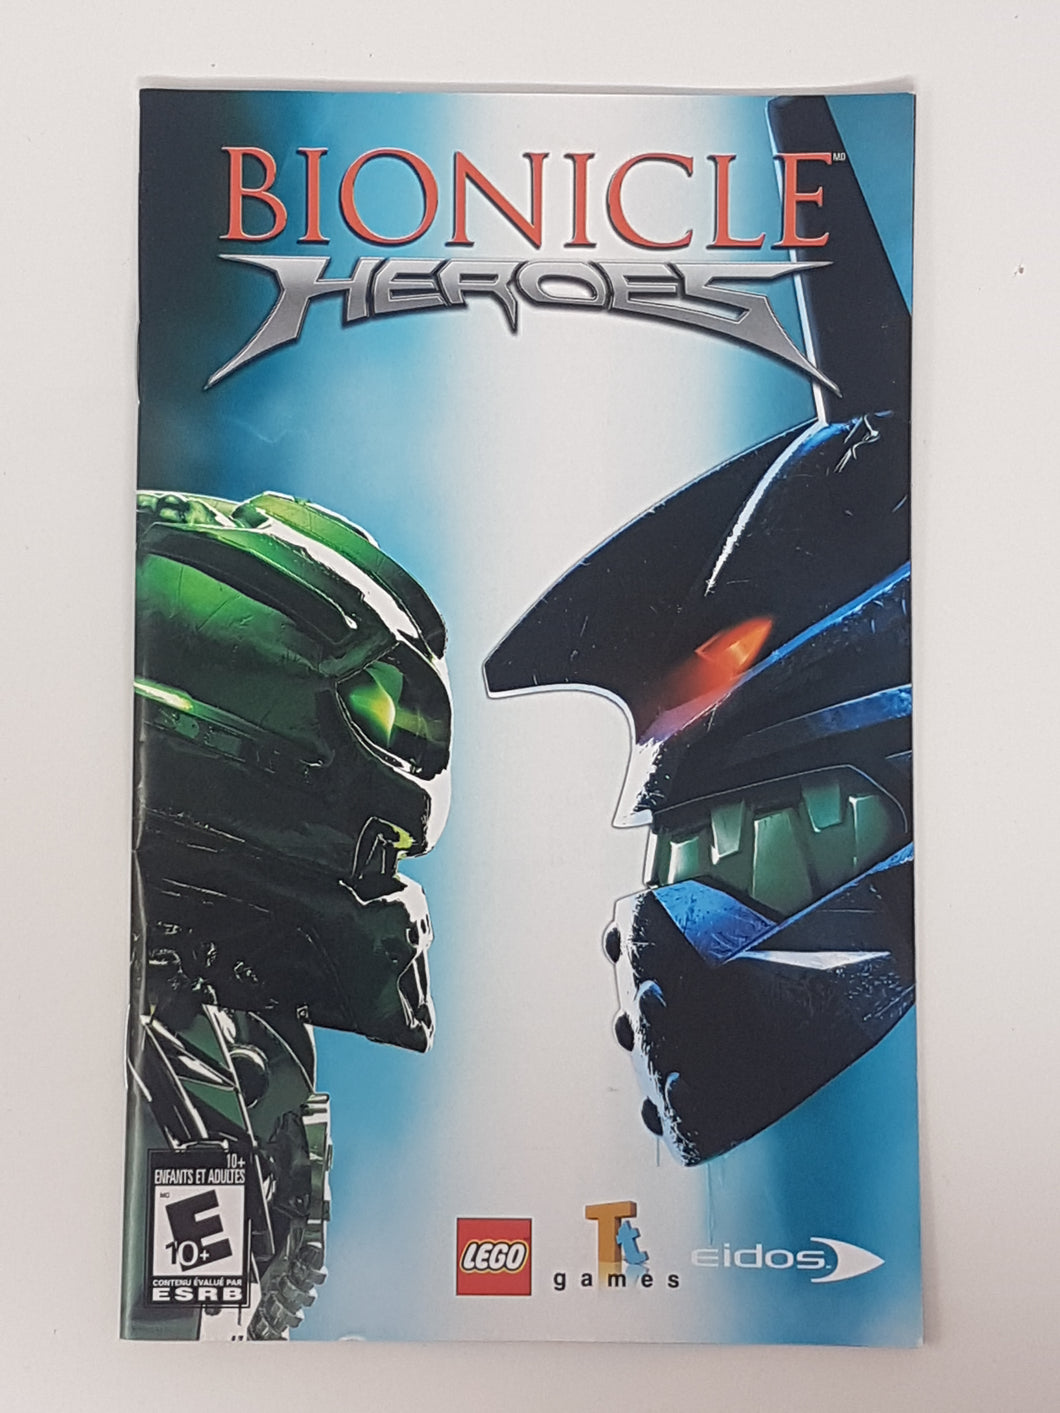 Bionicle Heroes [Manual] - Playstation 2 | PS2